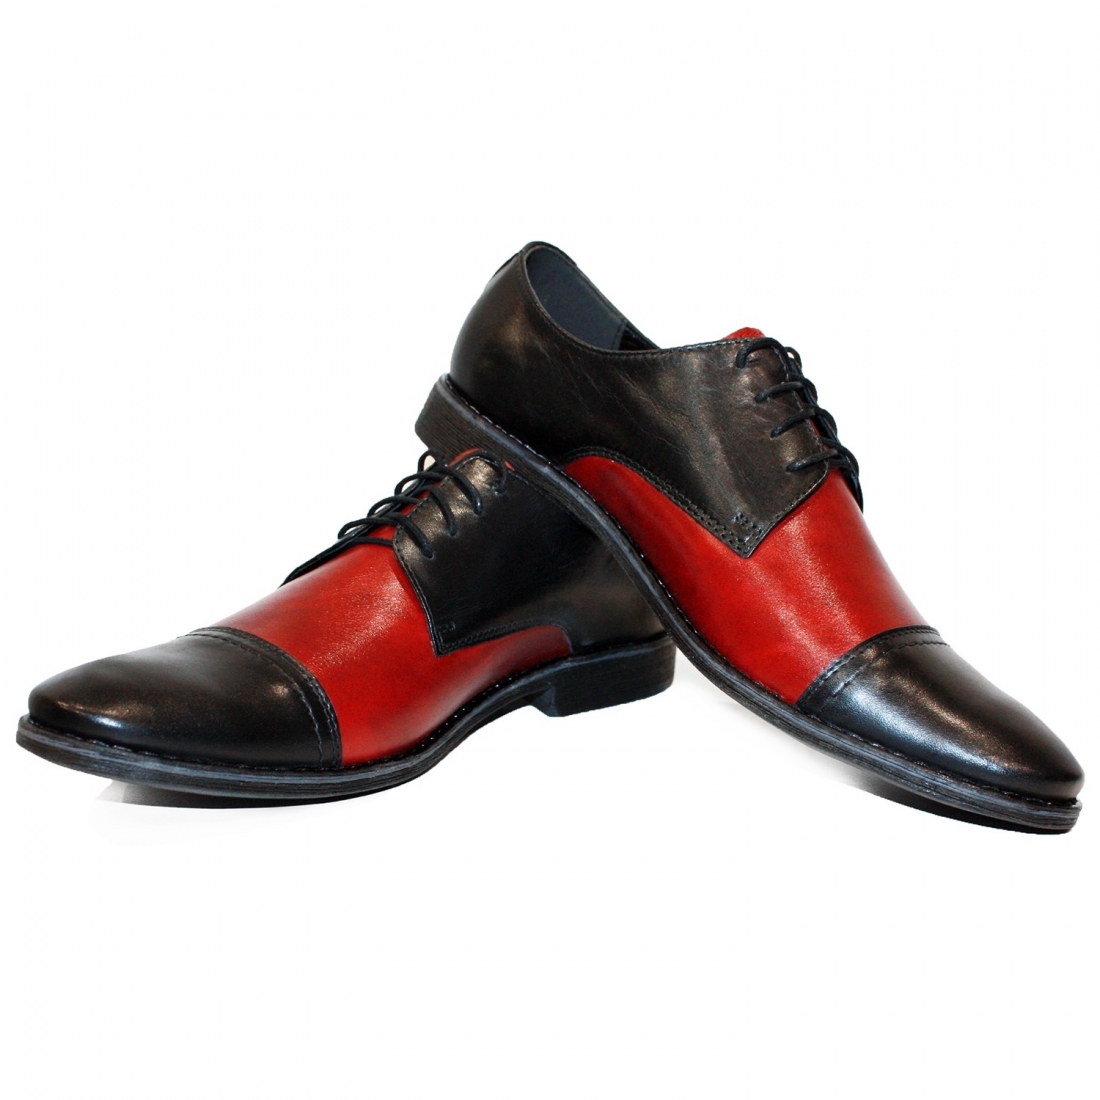 Modello Woserro - Classic Shoes - Handmade Colorful Italian Leather Shoes